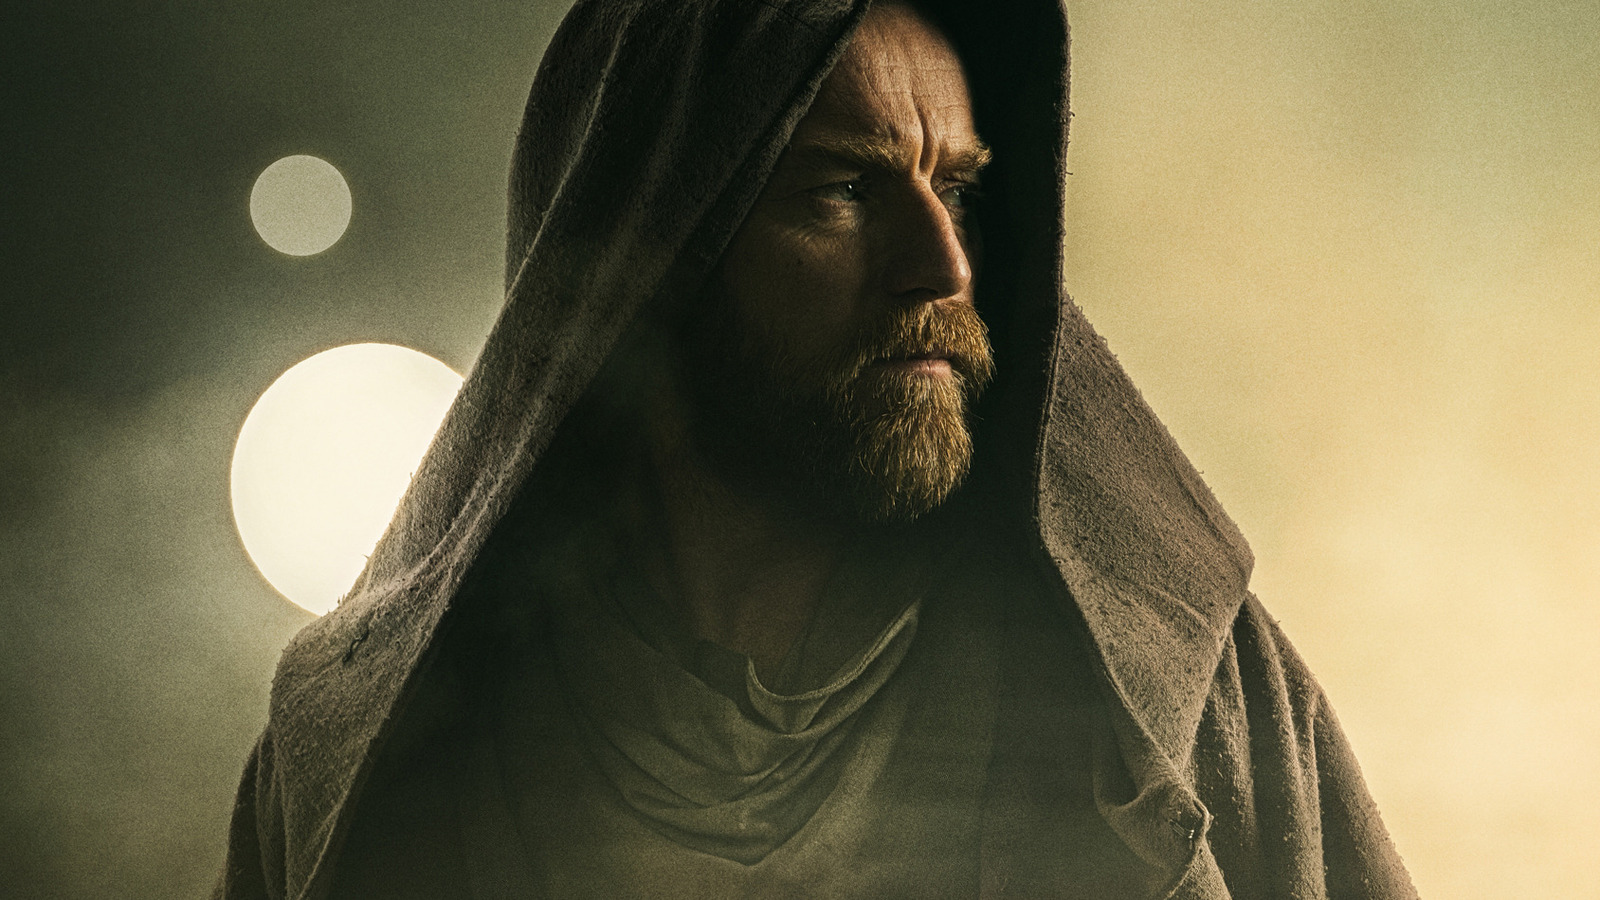 Obi-Wan Kenobi Featurette: Ewan McGregor Reflects On Stepping Into The Famous Star Wars Role